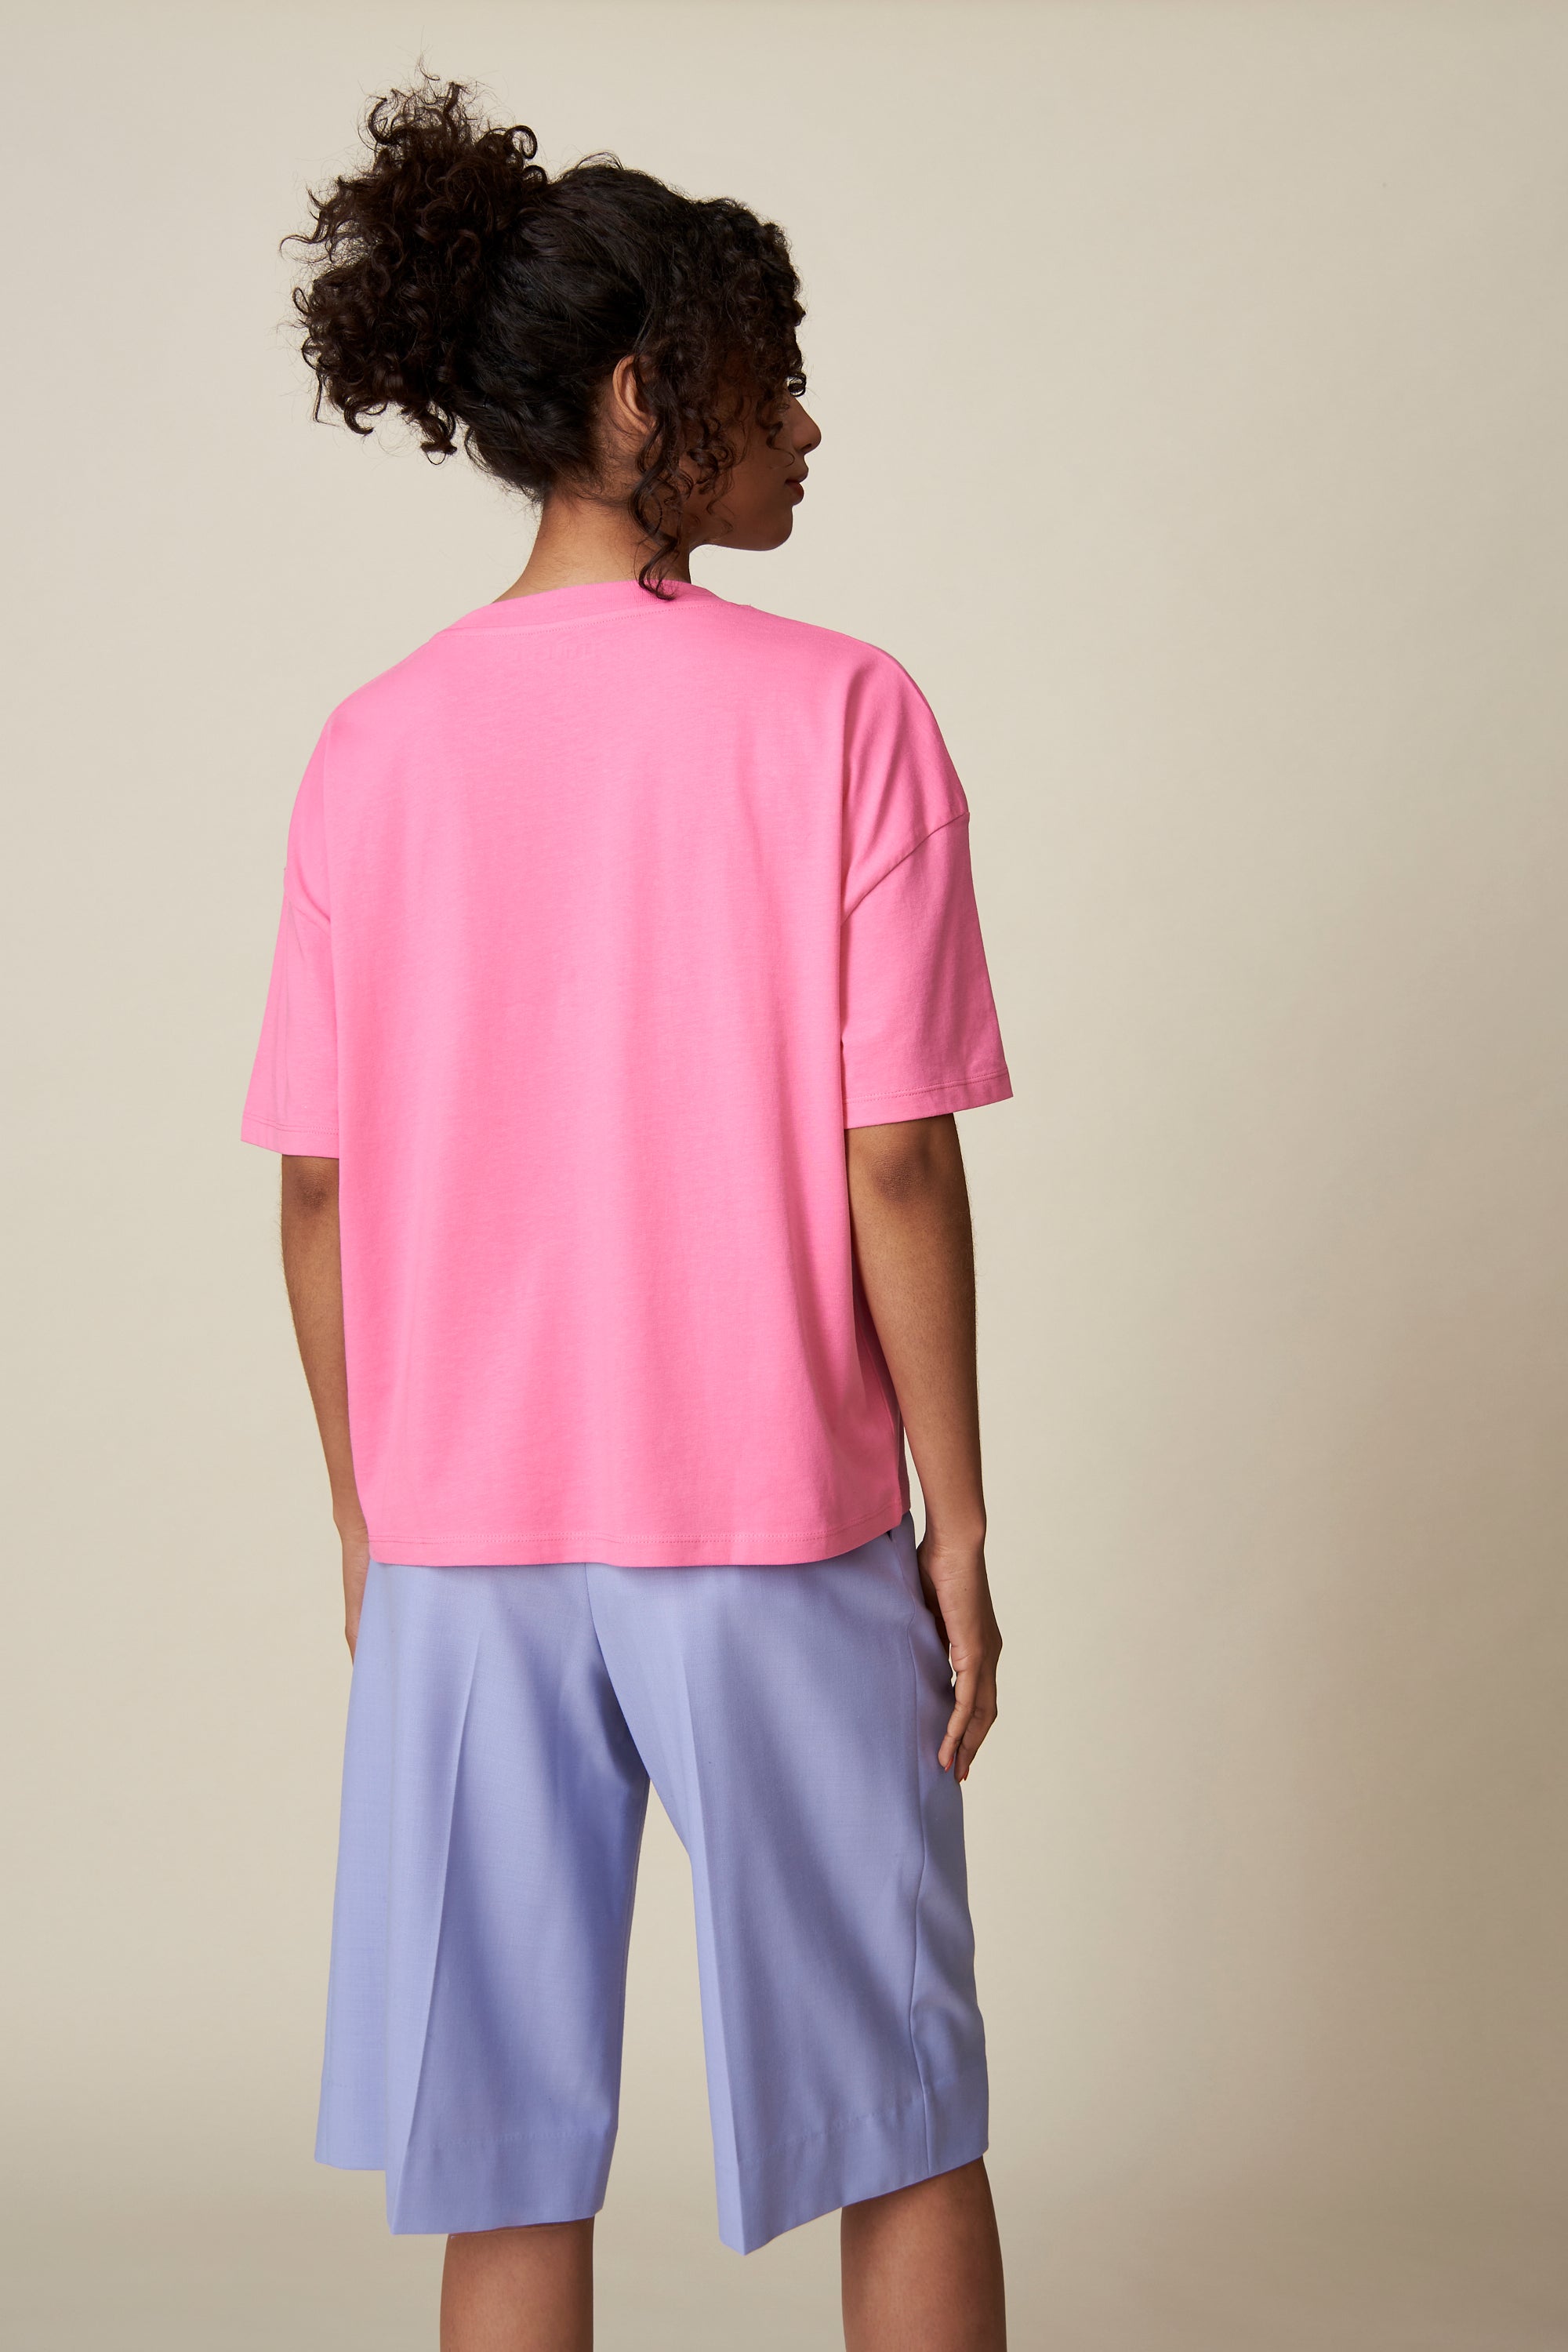 Les Vacances Loose T-Shirt - Pink/Blau